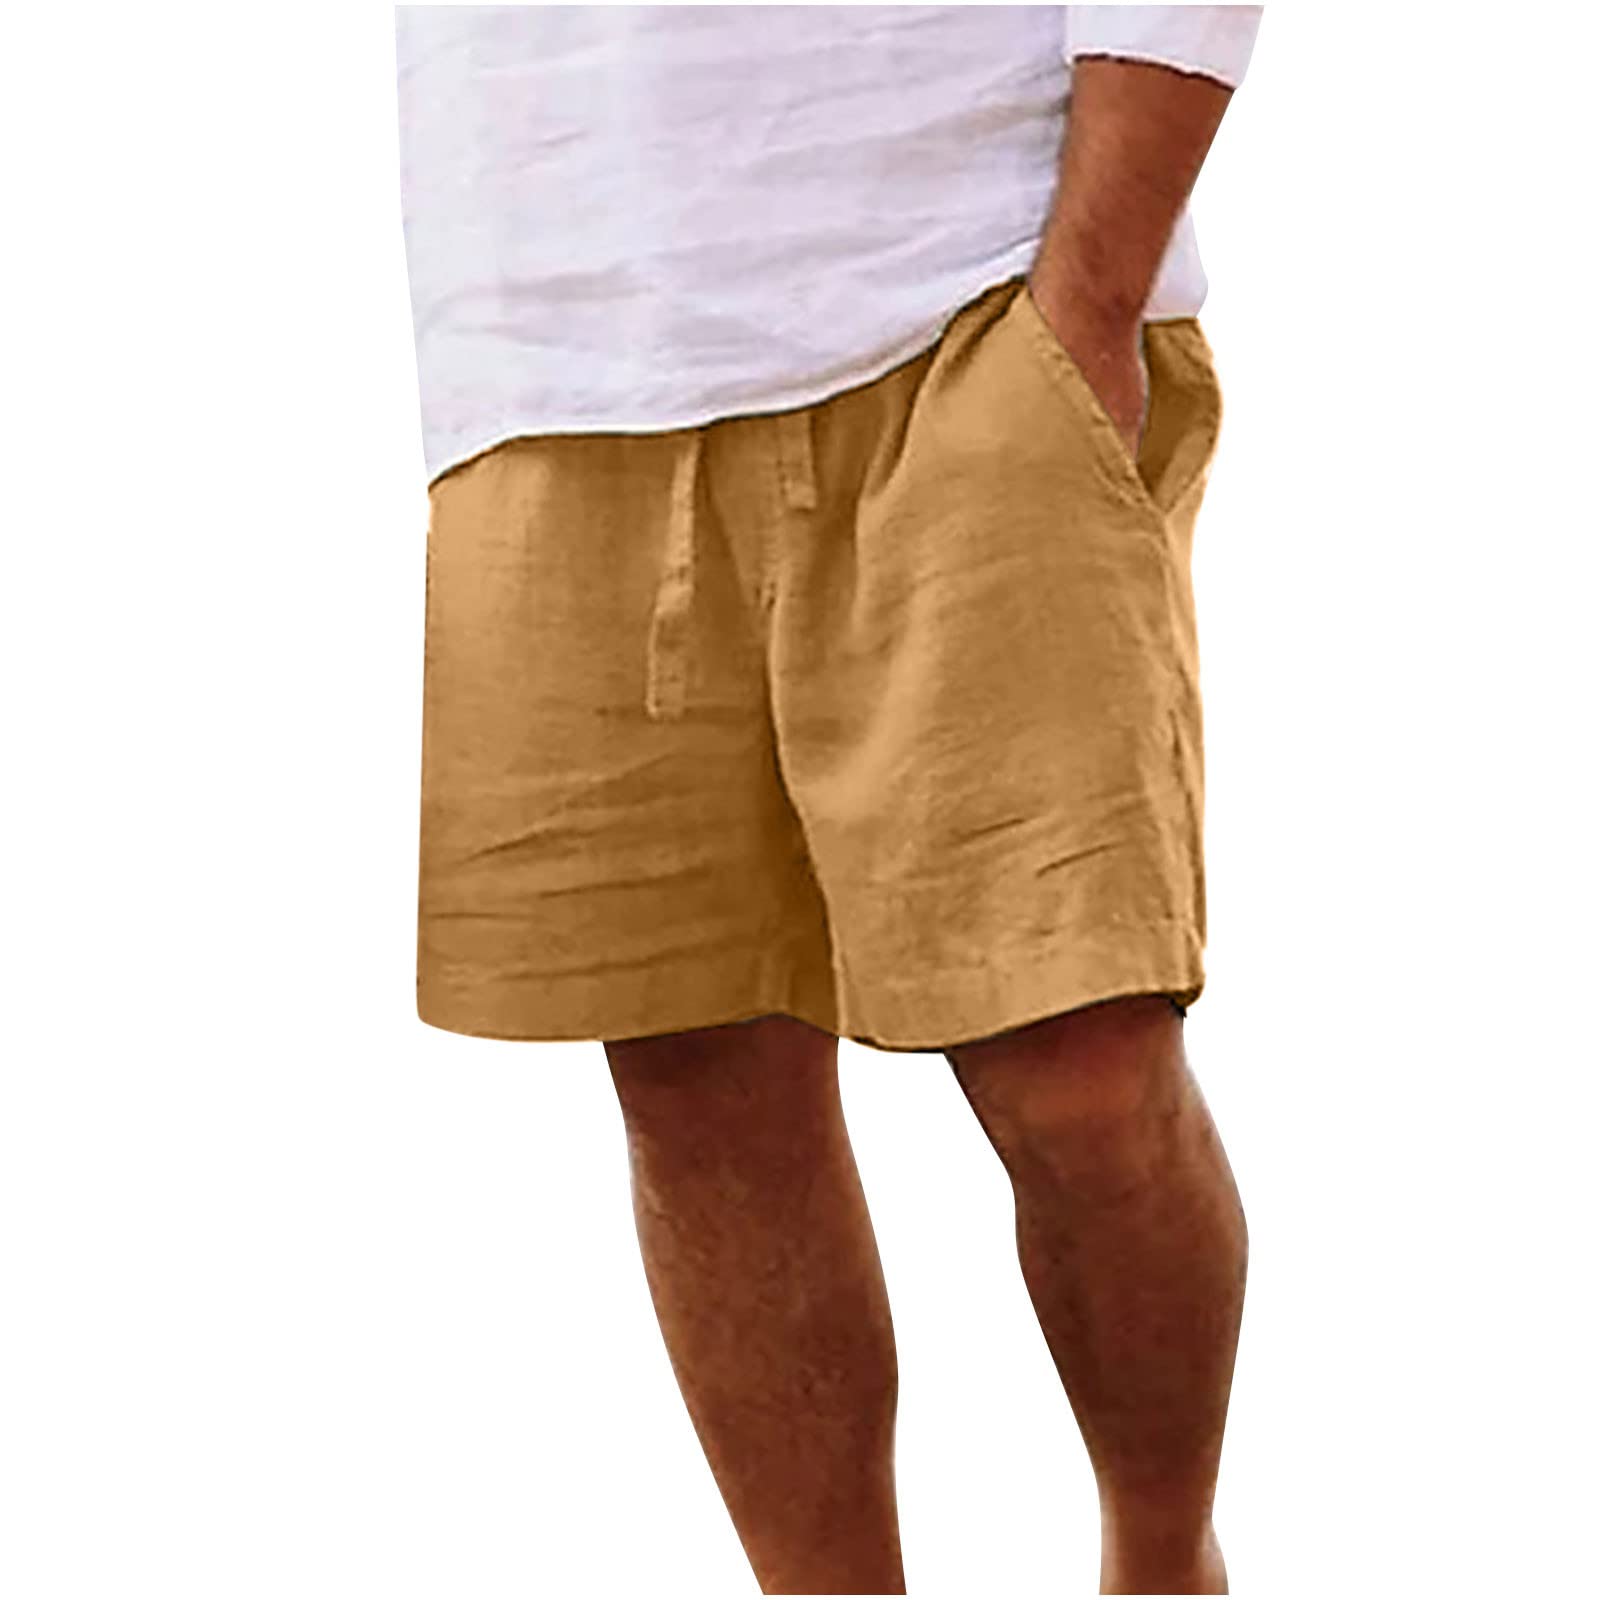 Athletic Shorts Mens Men Linen Shorts Elastic Waist Drawstring Cotton Linen Shorts with Pockets Loose Fit Outdoor Summer Beach Shorts White Linen Shorts Men 7 Inch Inseam Yellow 5X